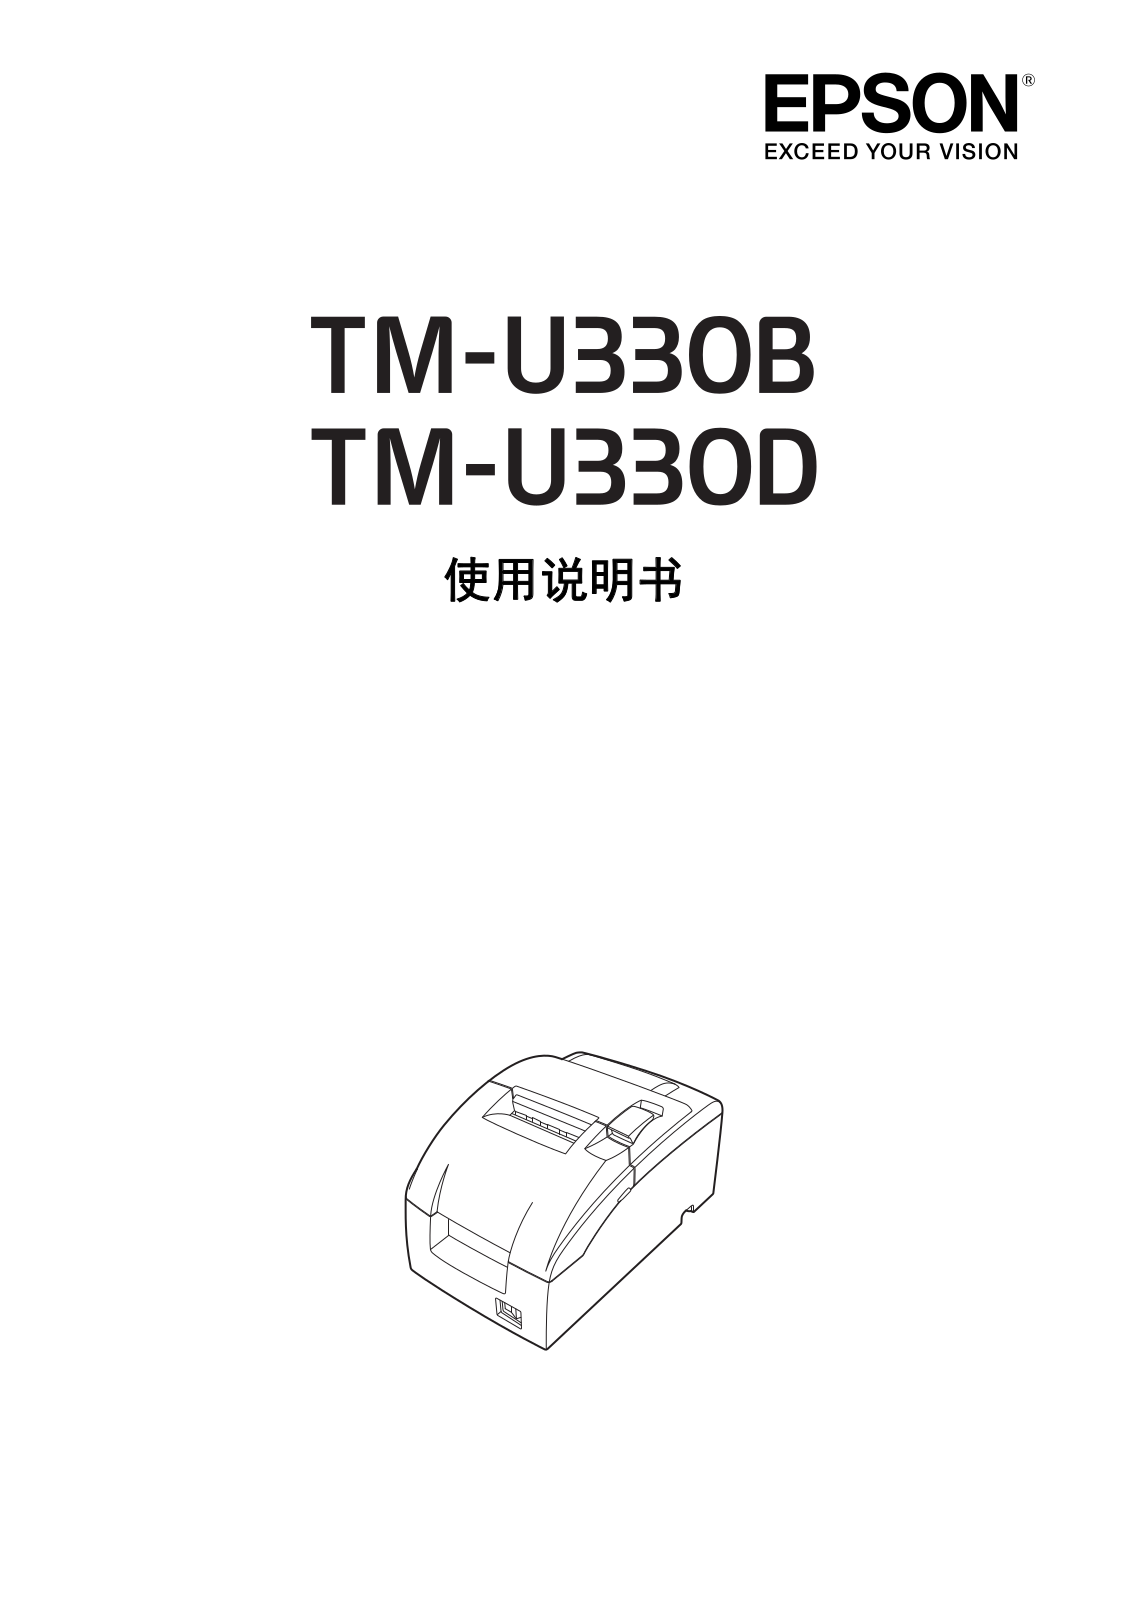 Epson TM-U330B, TM-U330D User's Manual